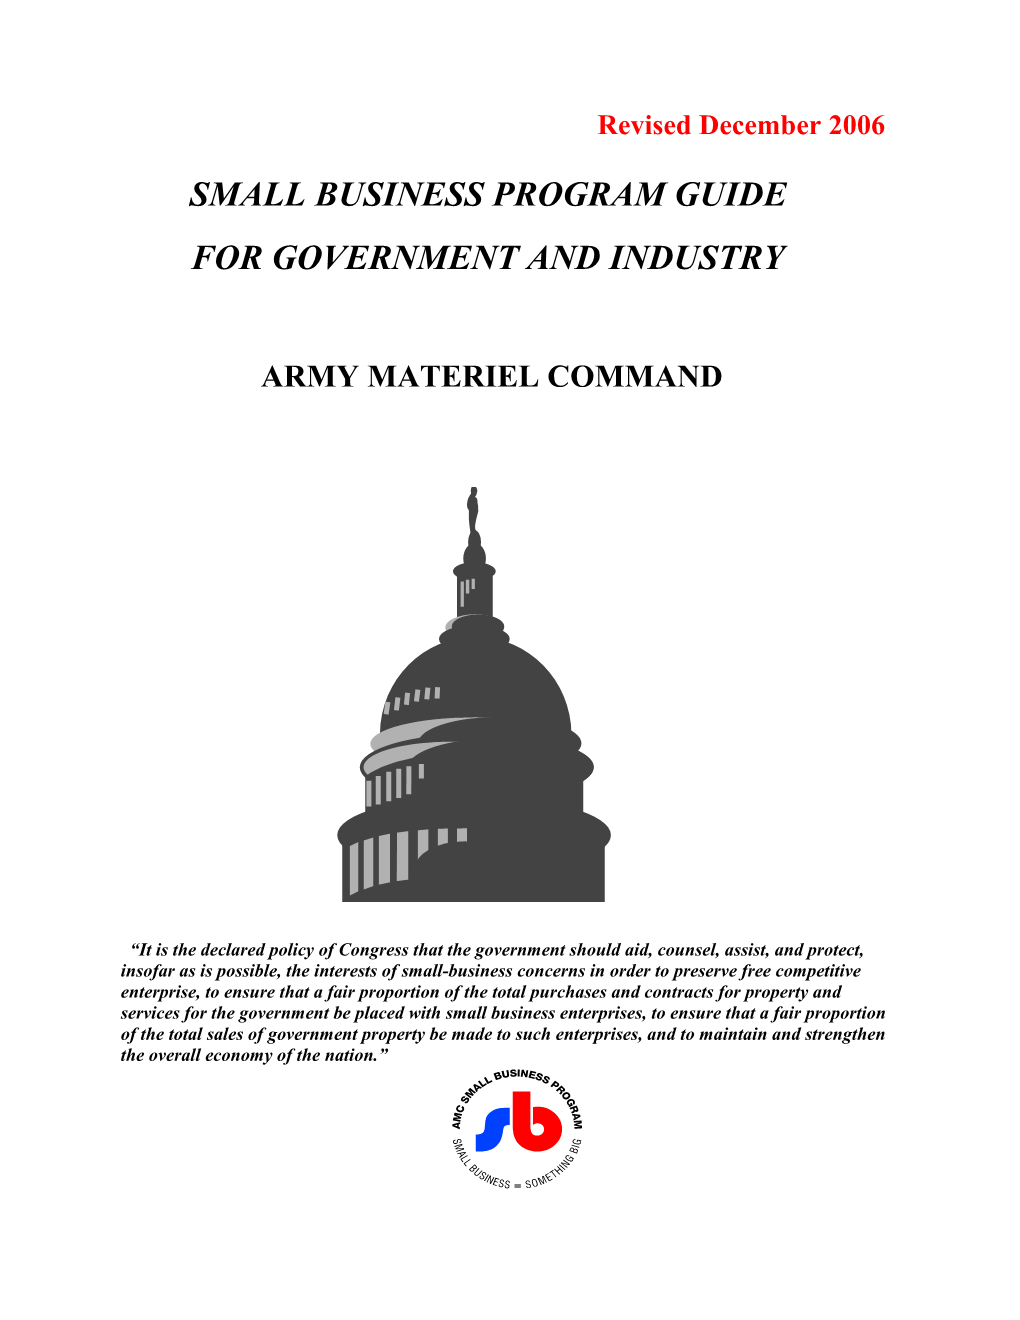 Small Business Program Guide